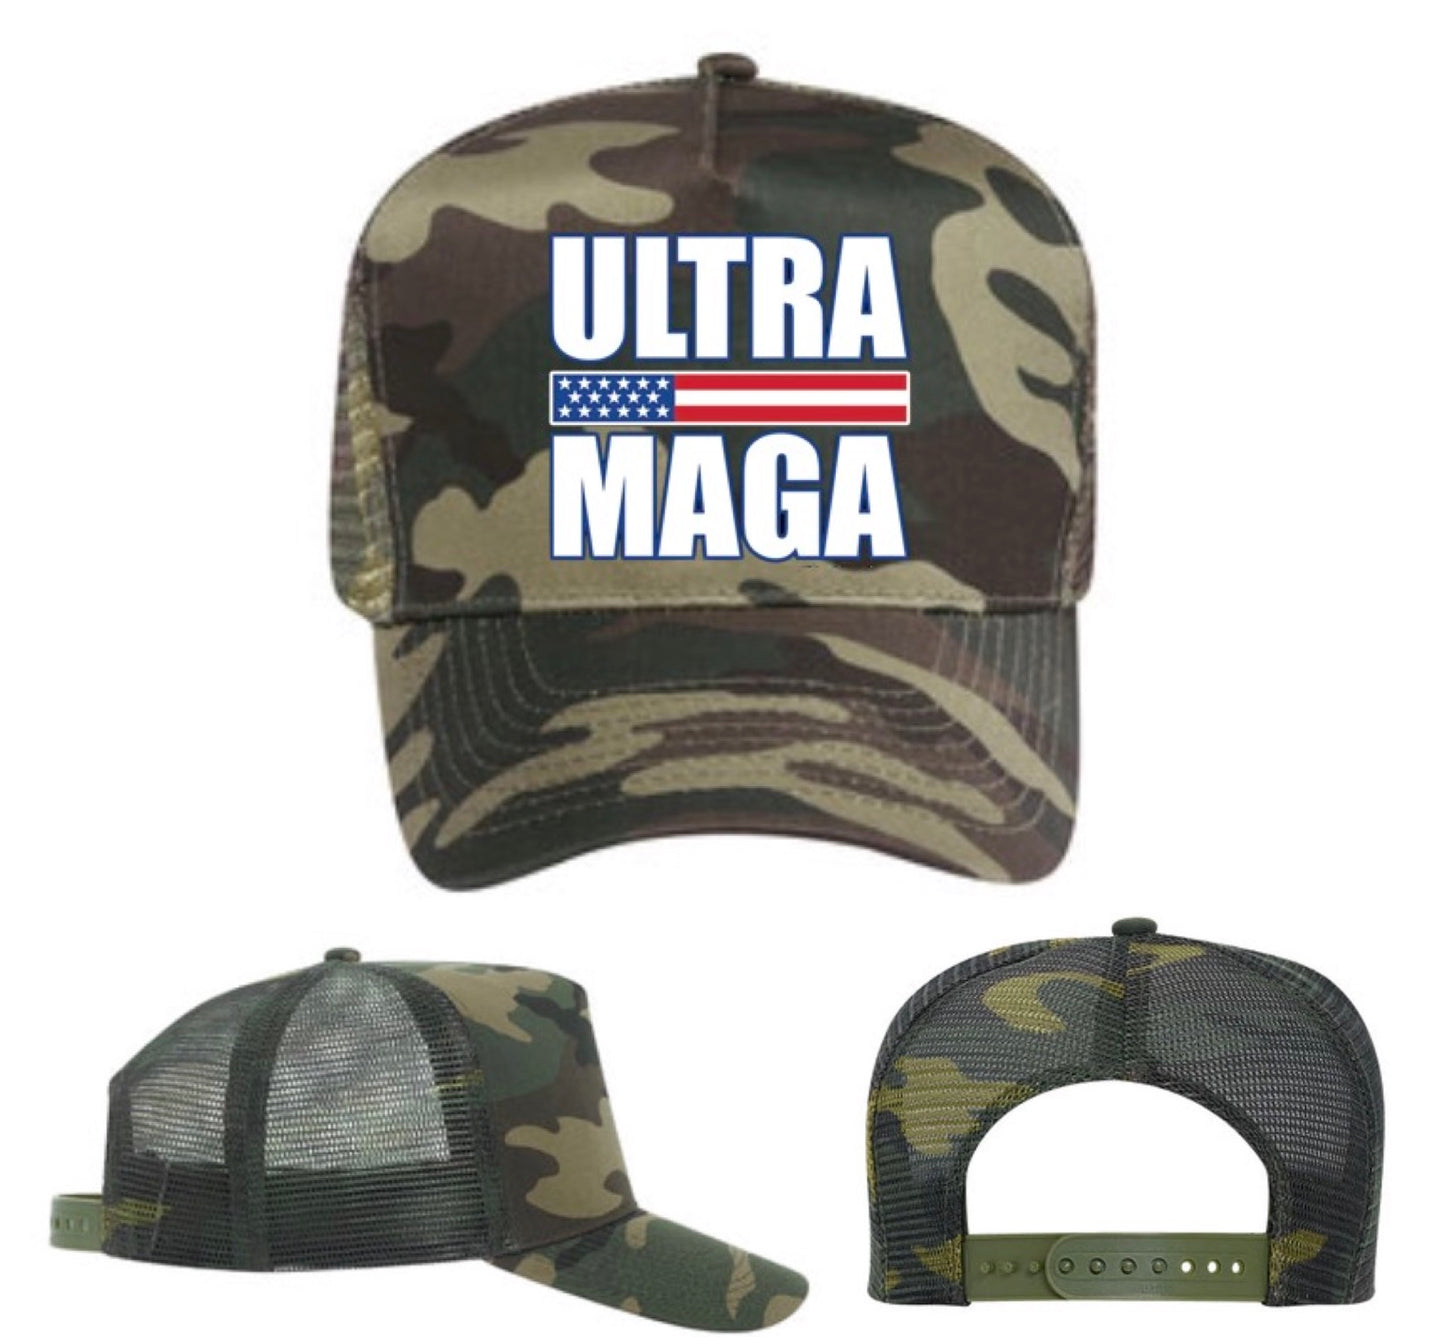 Buy 1 Get 1 Free — Ultra MAGA Camo Hat